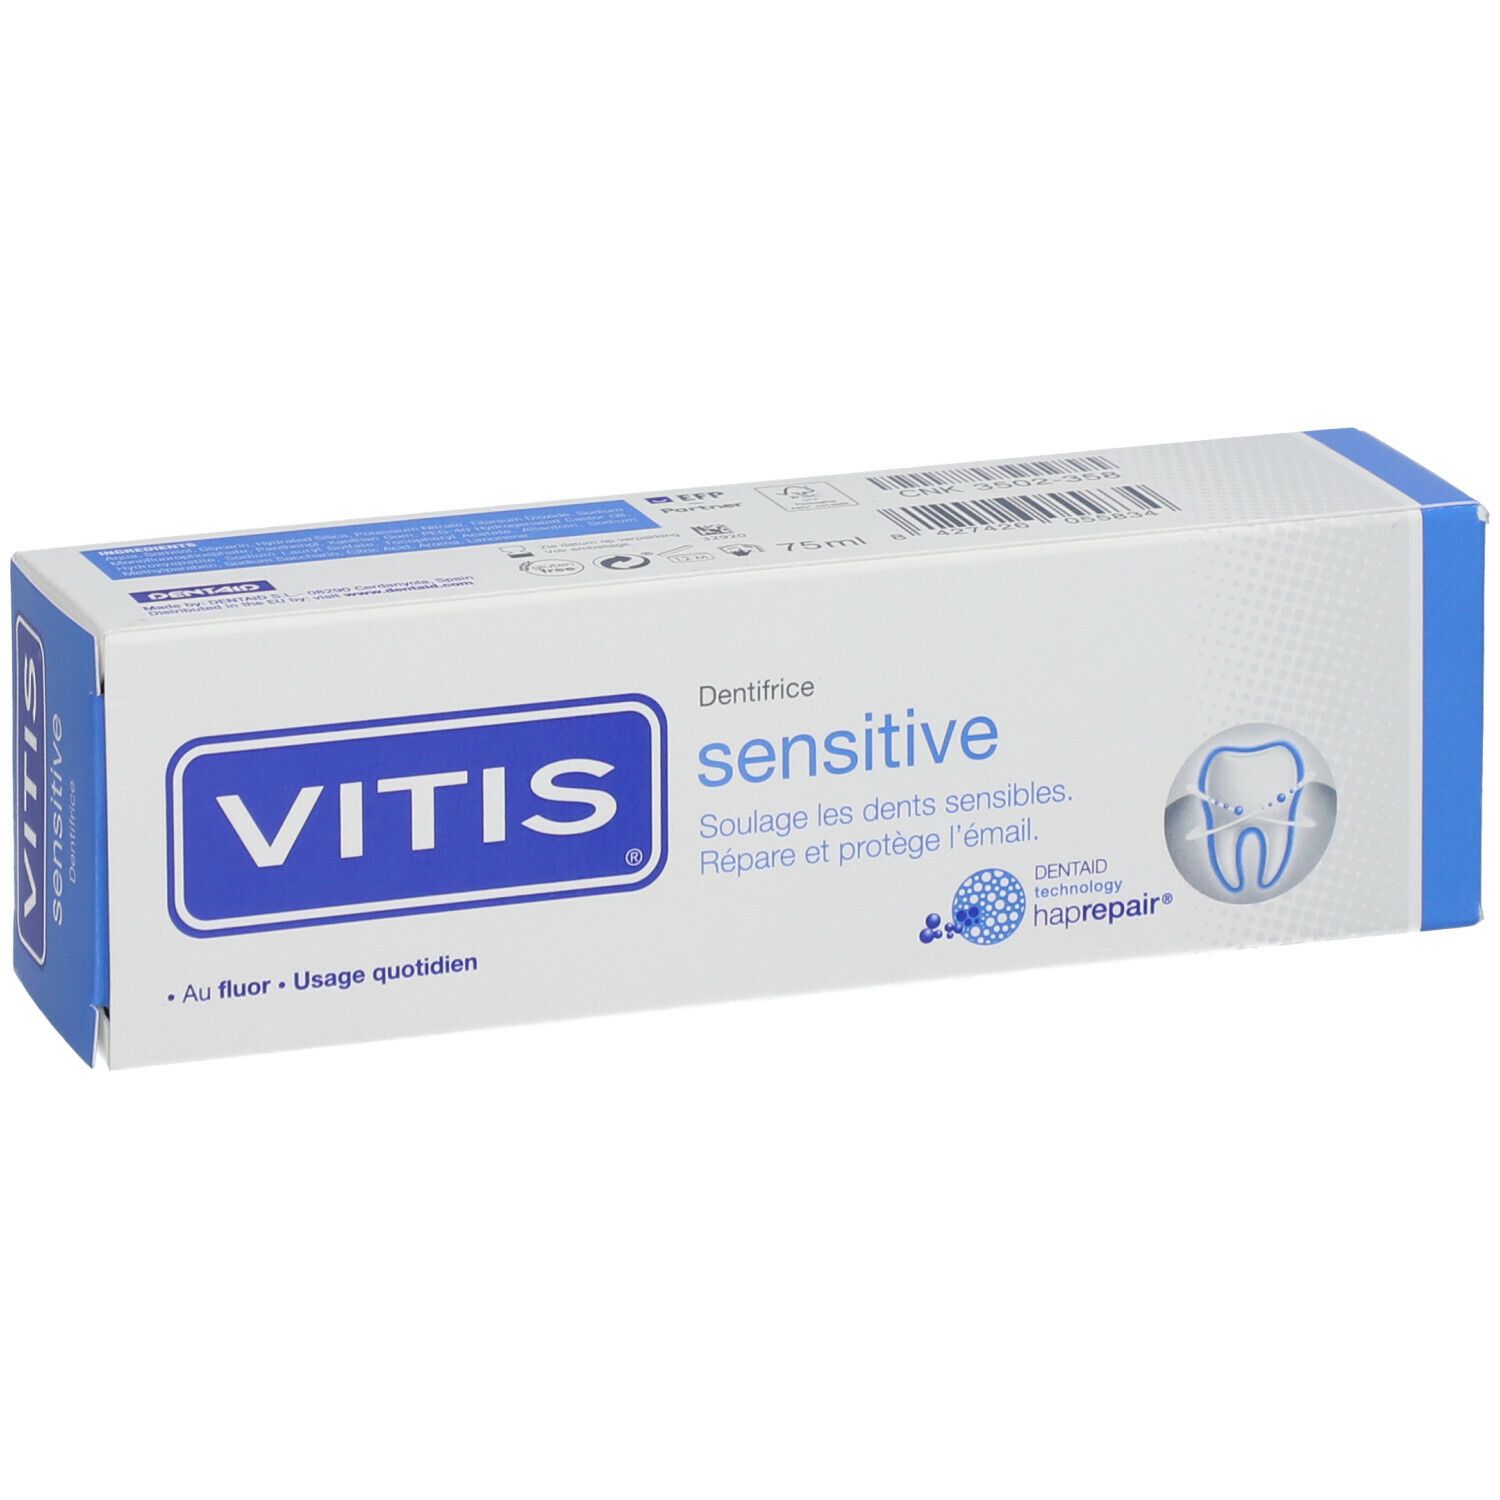 Vitis Sensitive Dentifrice